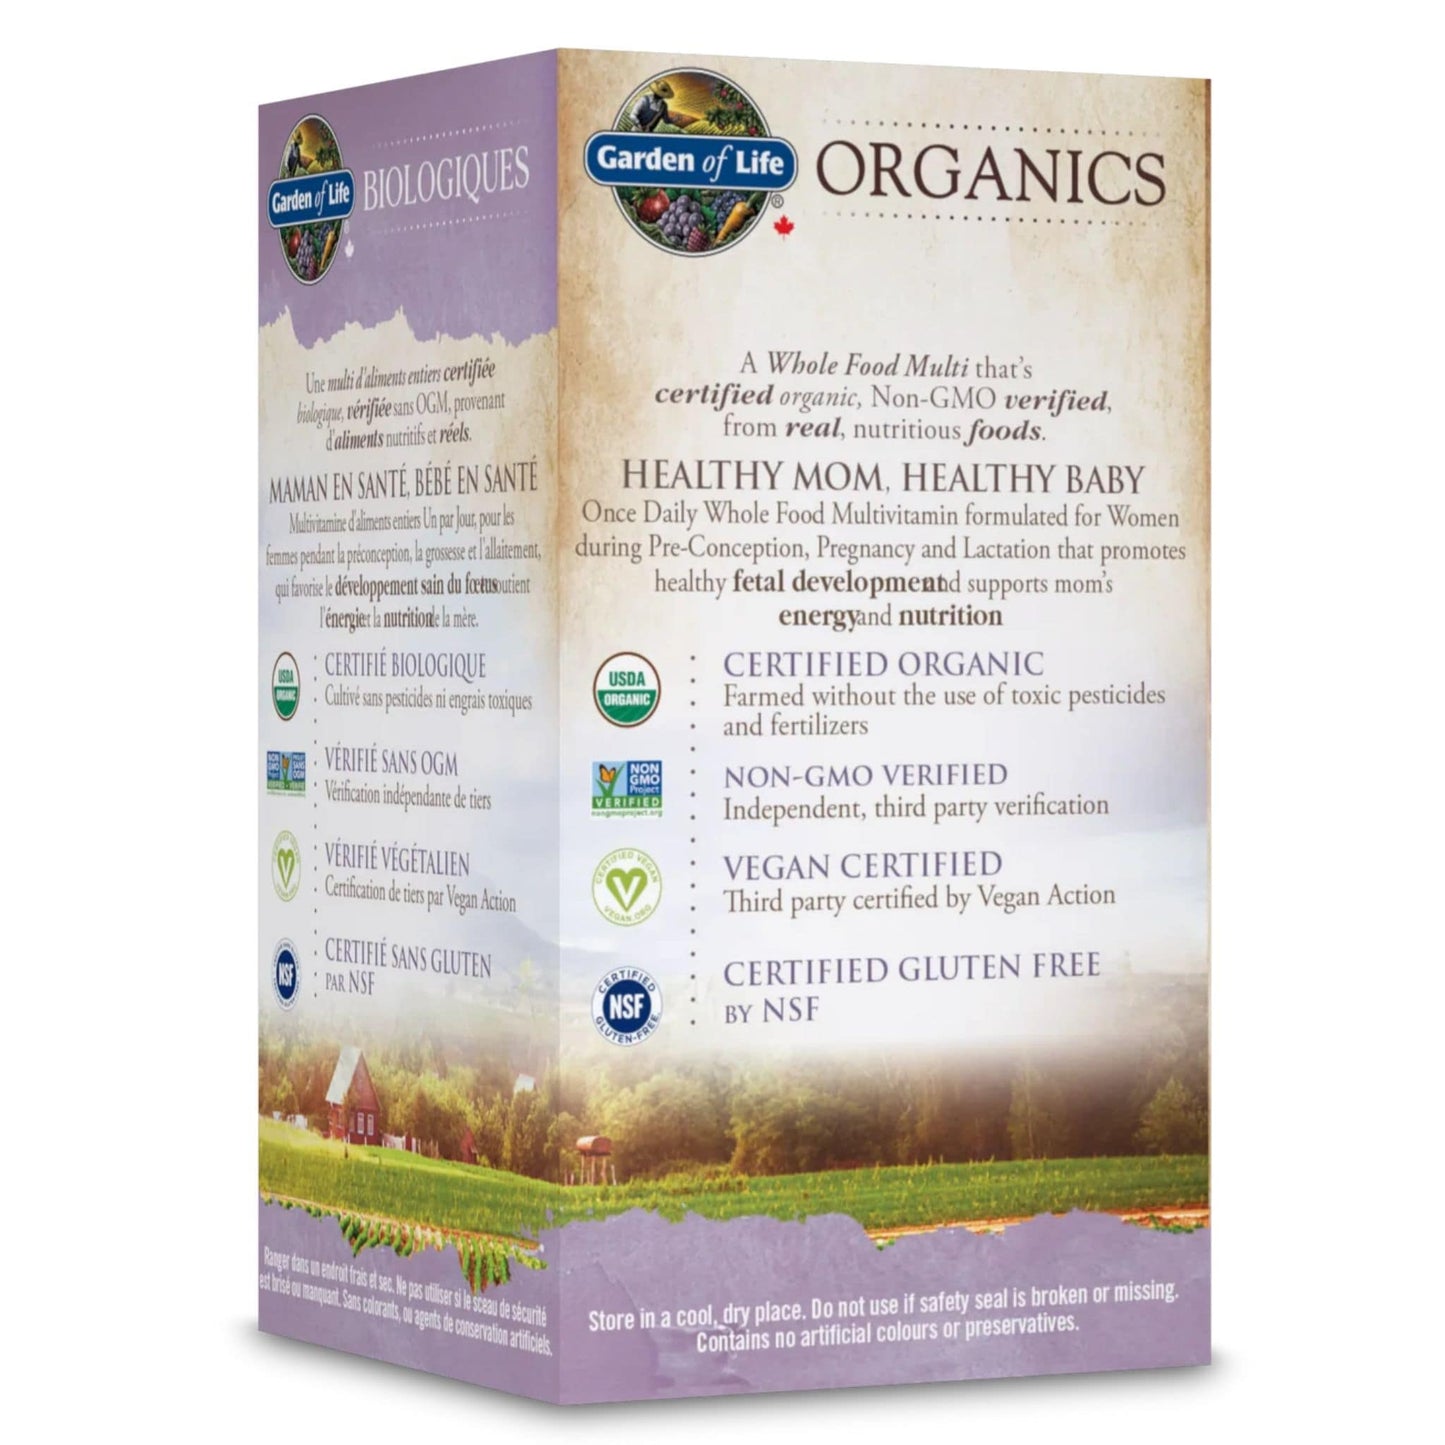 30 Vegan Tablets | Garden of Life Mykind Organic Prenatal Once Daily